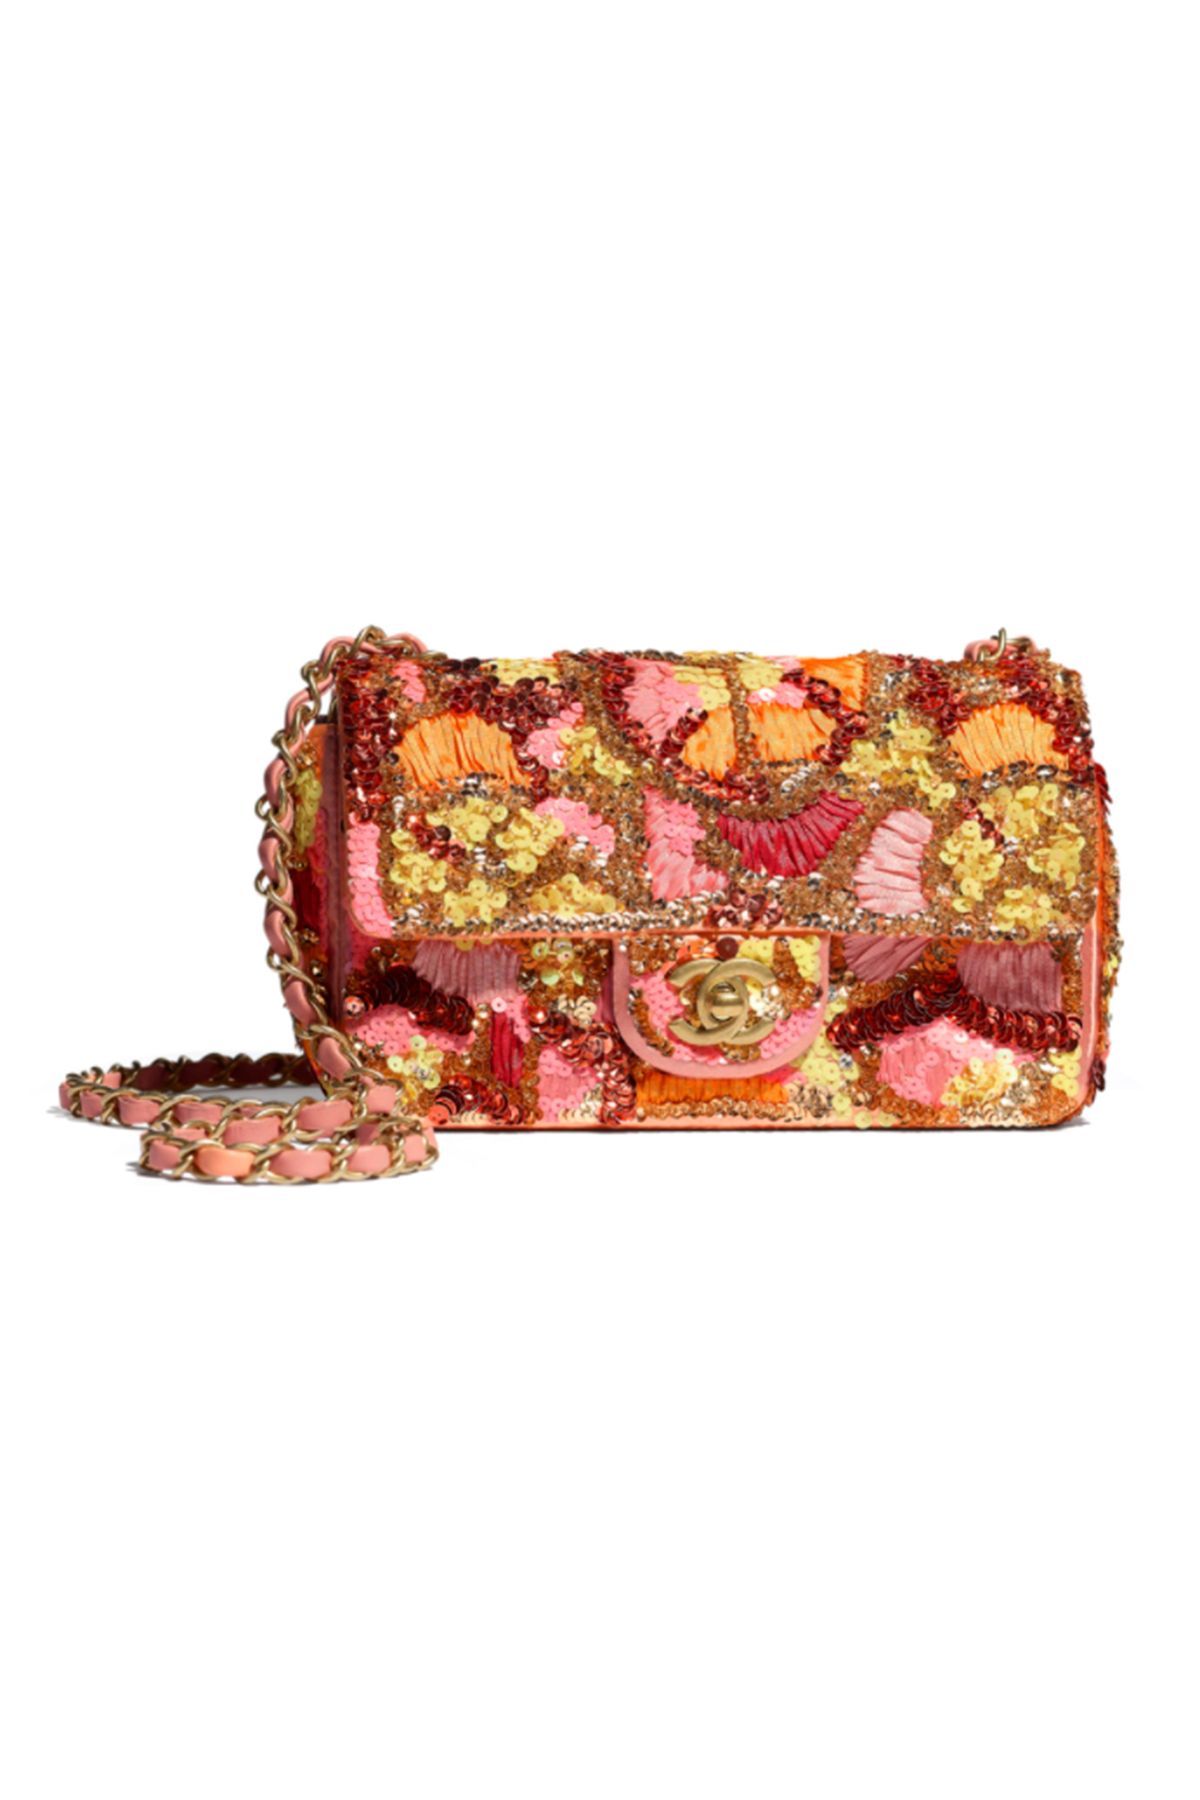 Mini flap bag Sequins  goldtone metal light pink  Fashion  CHANEL